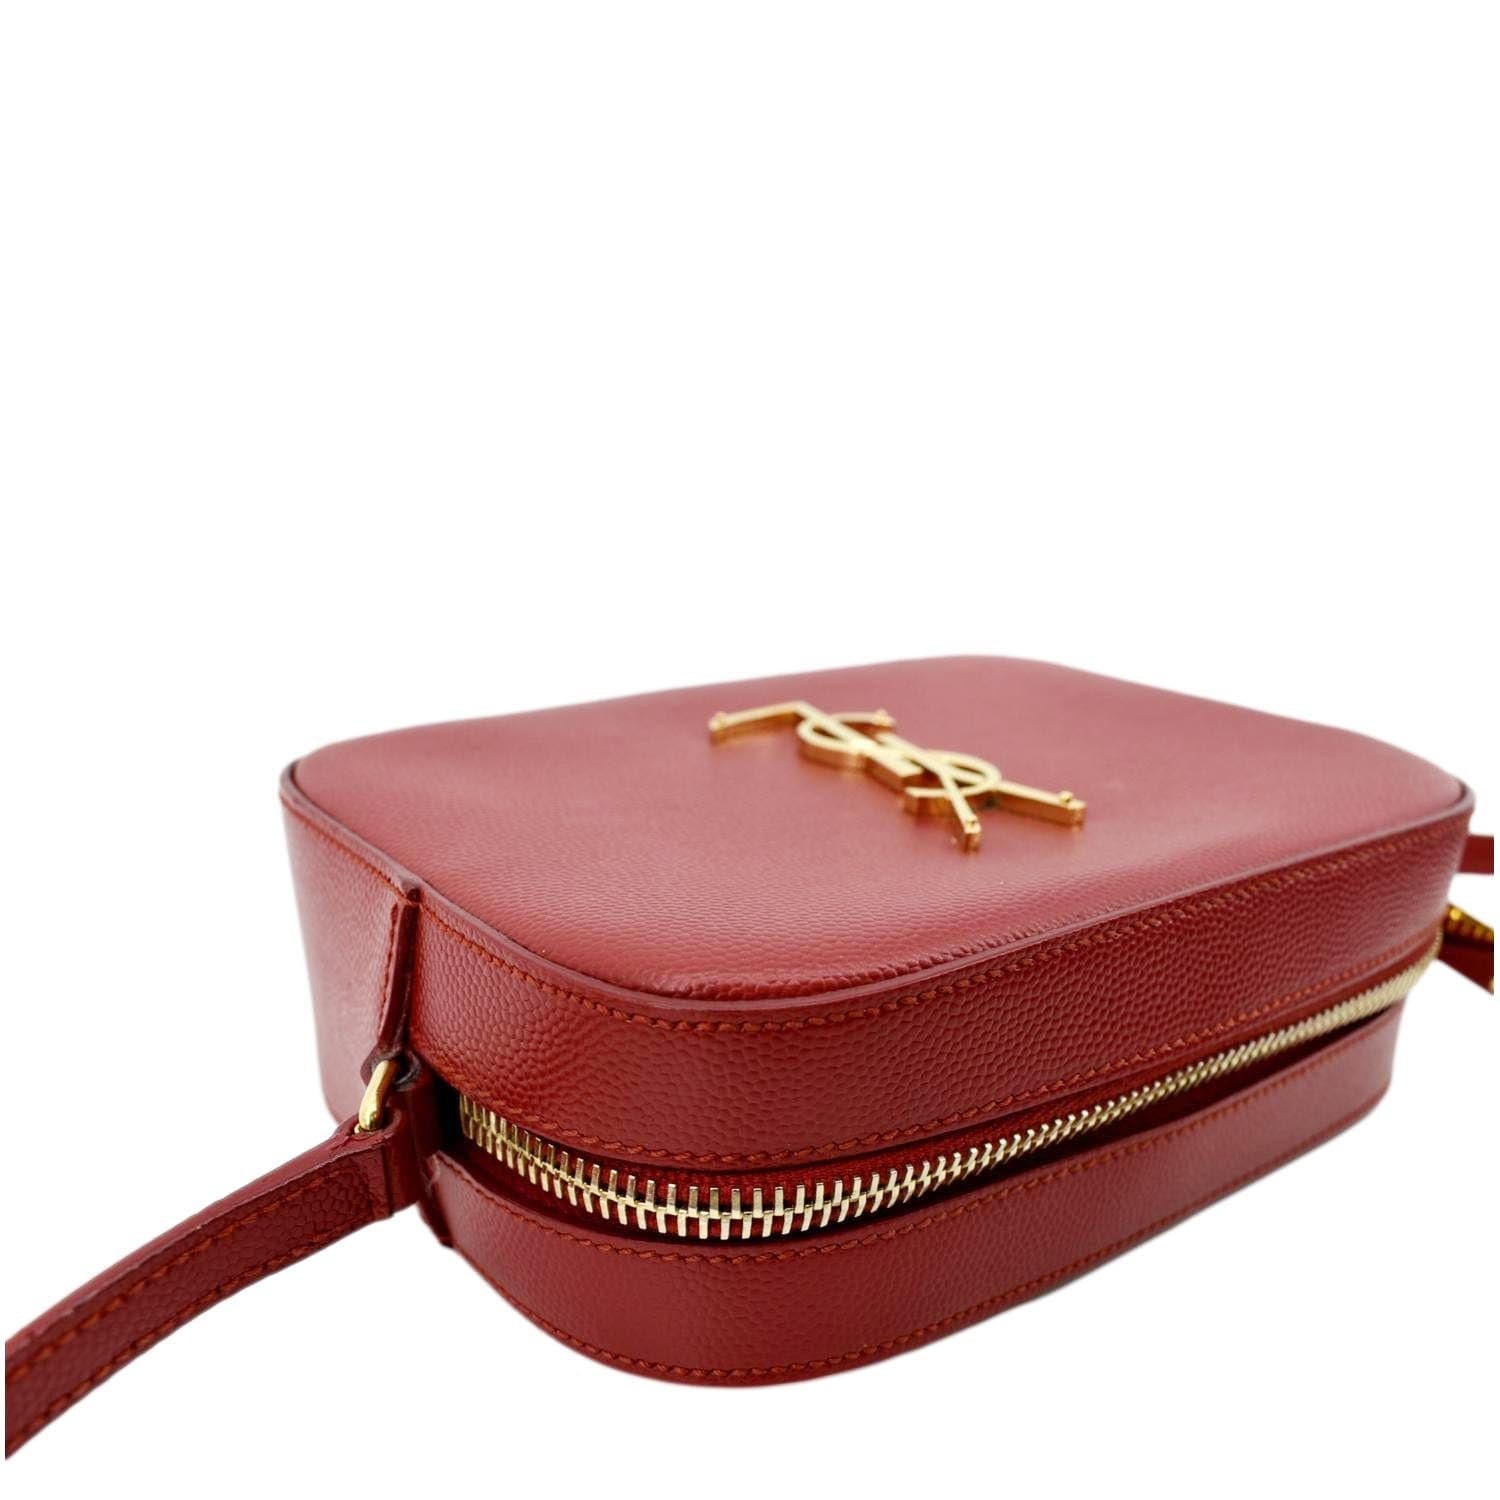 Vintage Yves Saint Laurent Red Leather Crossbody Bag | eBay